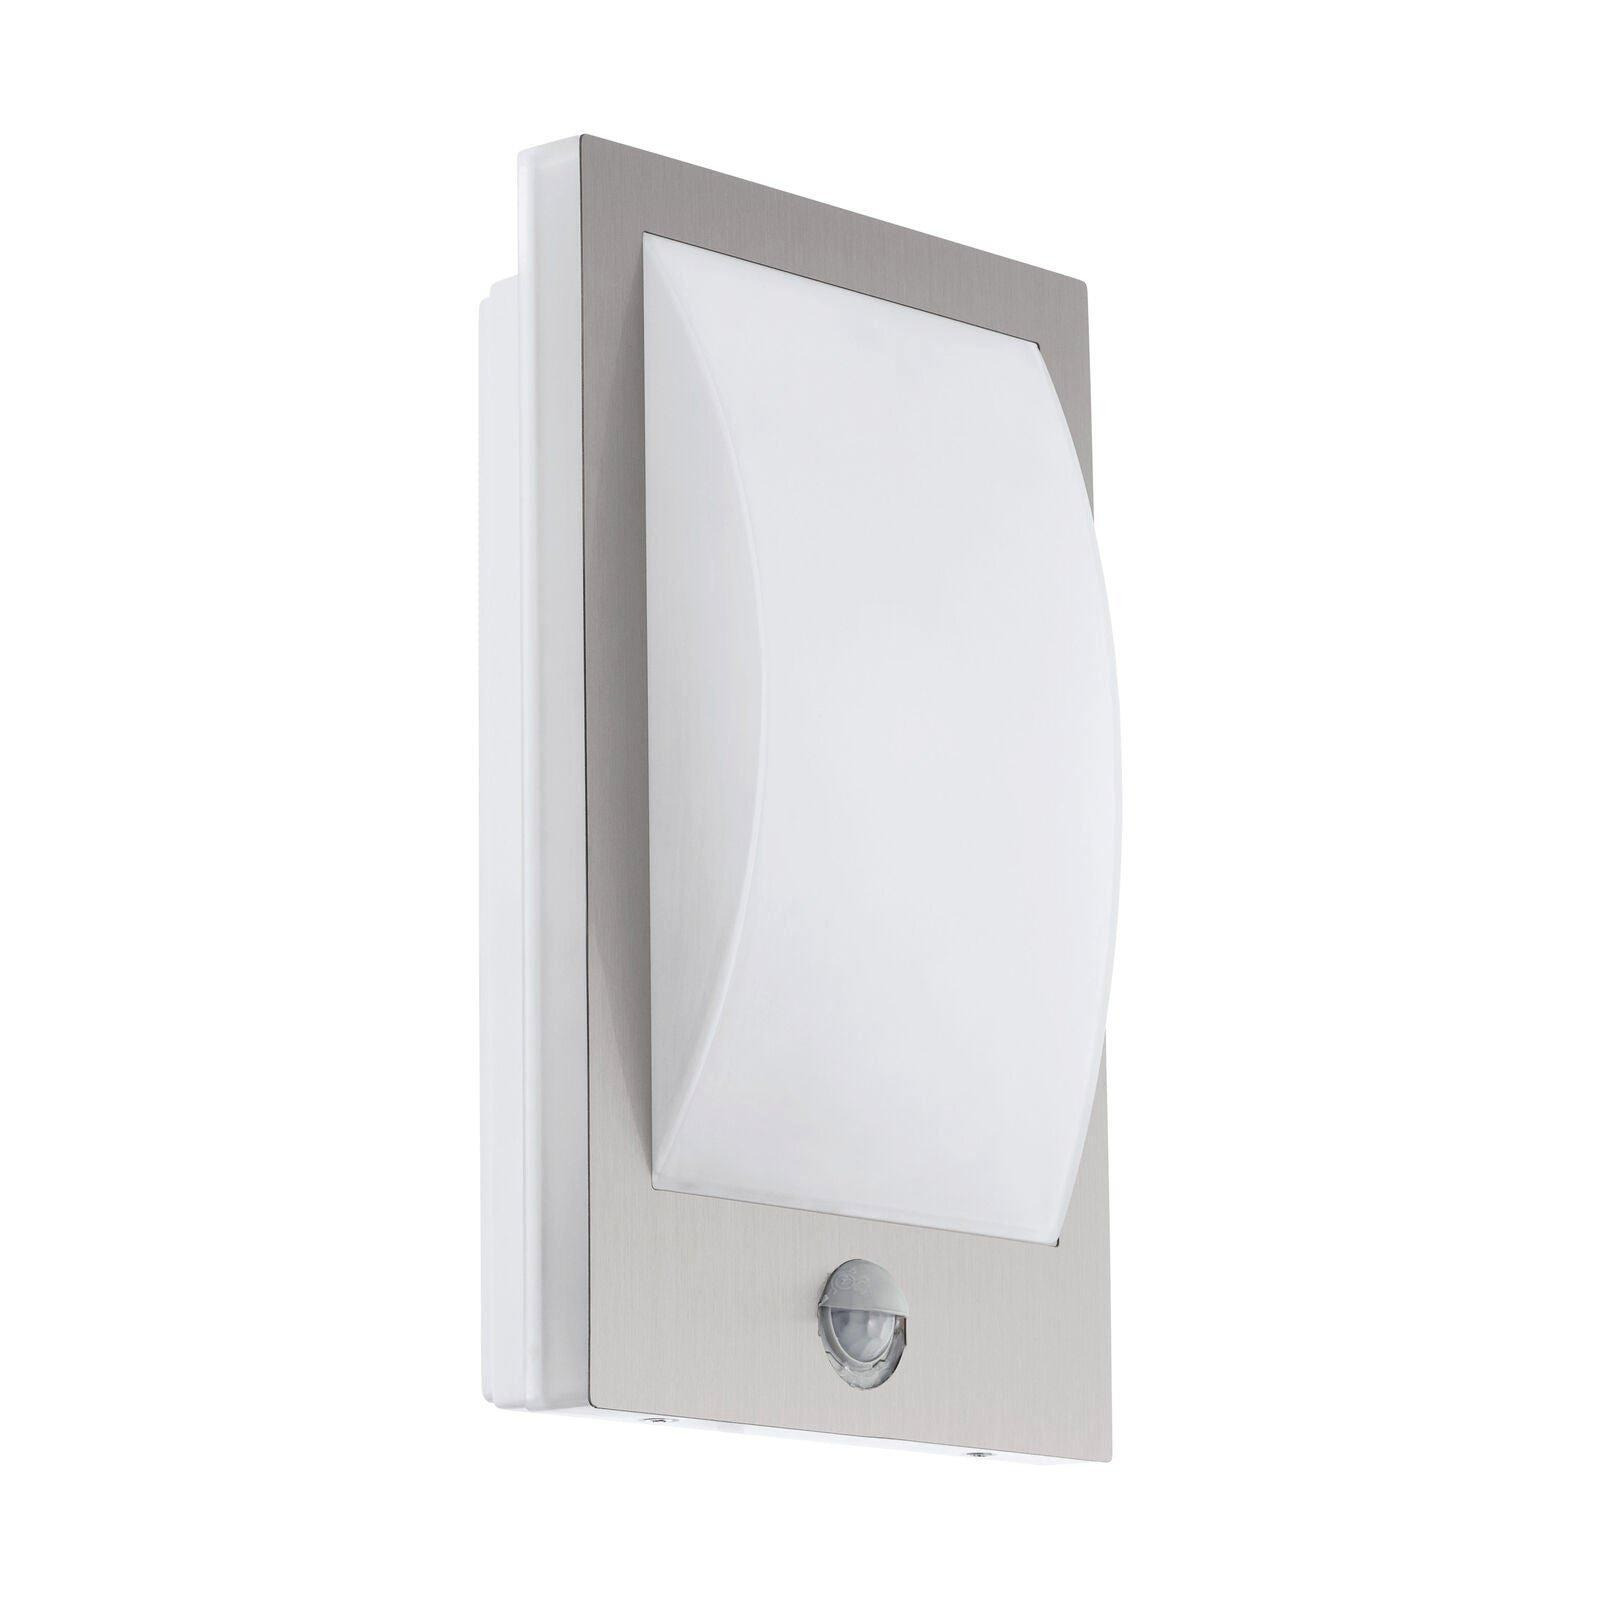 IP44 Outdoor Wall Light & PIR Sensor Stainless Steel & White 1 x 12W E27 Bulb - image 1